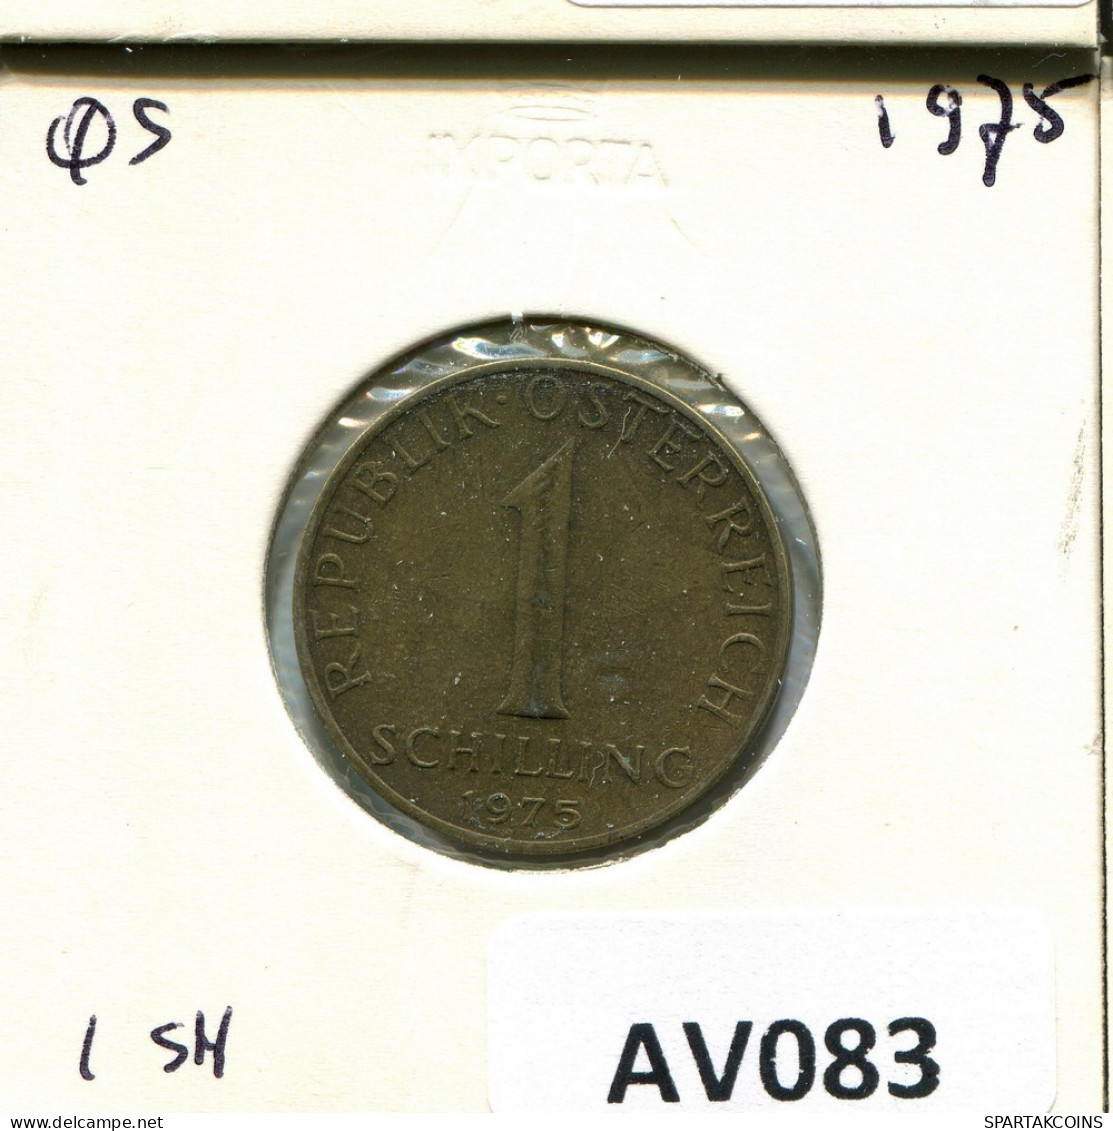 1 SCHILLING 1975 AUSTRIA Coin #AV083.U.A - Austria